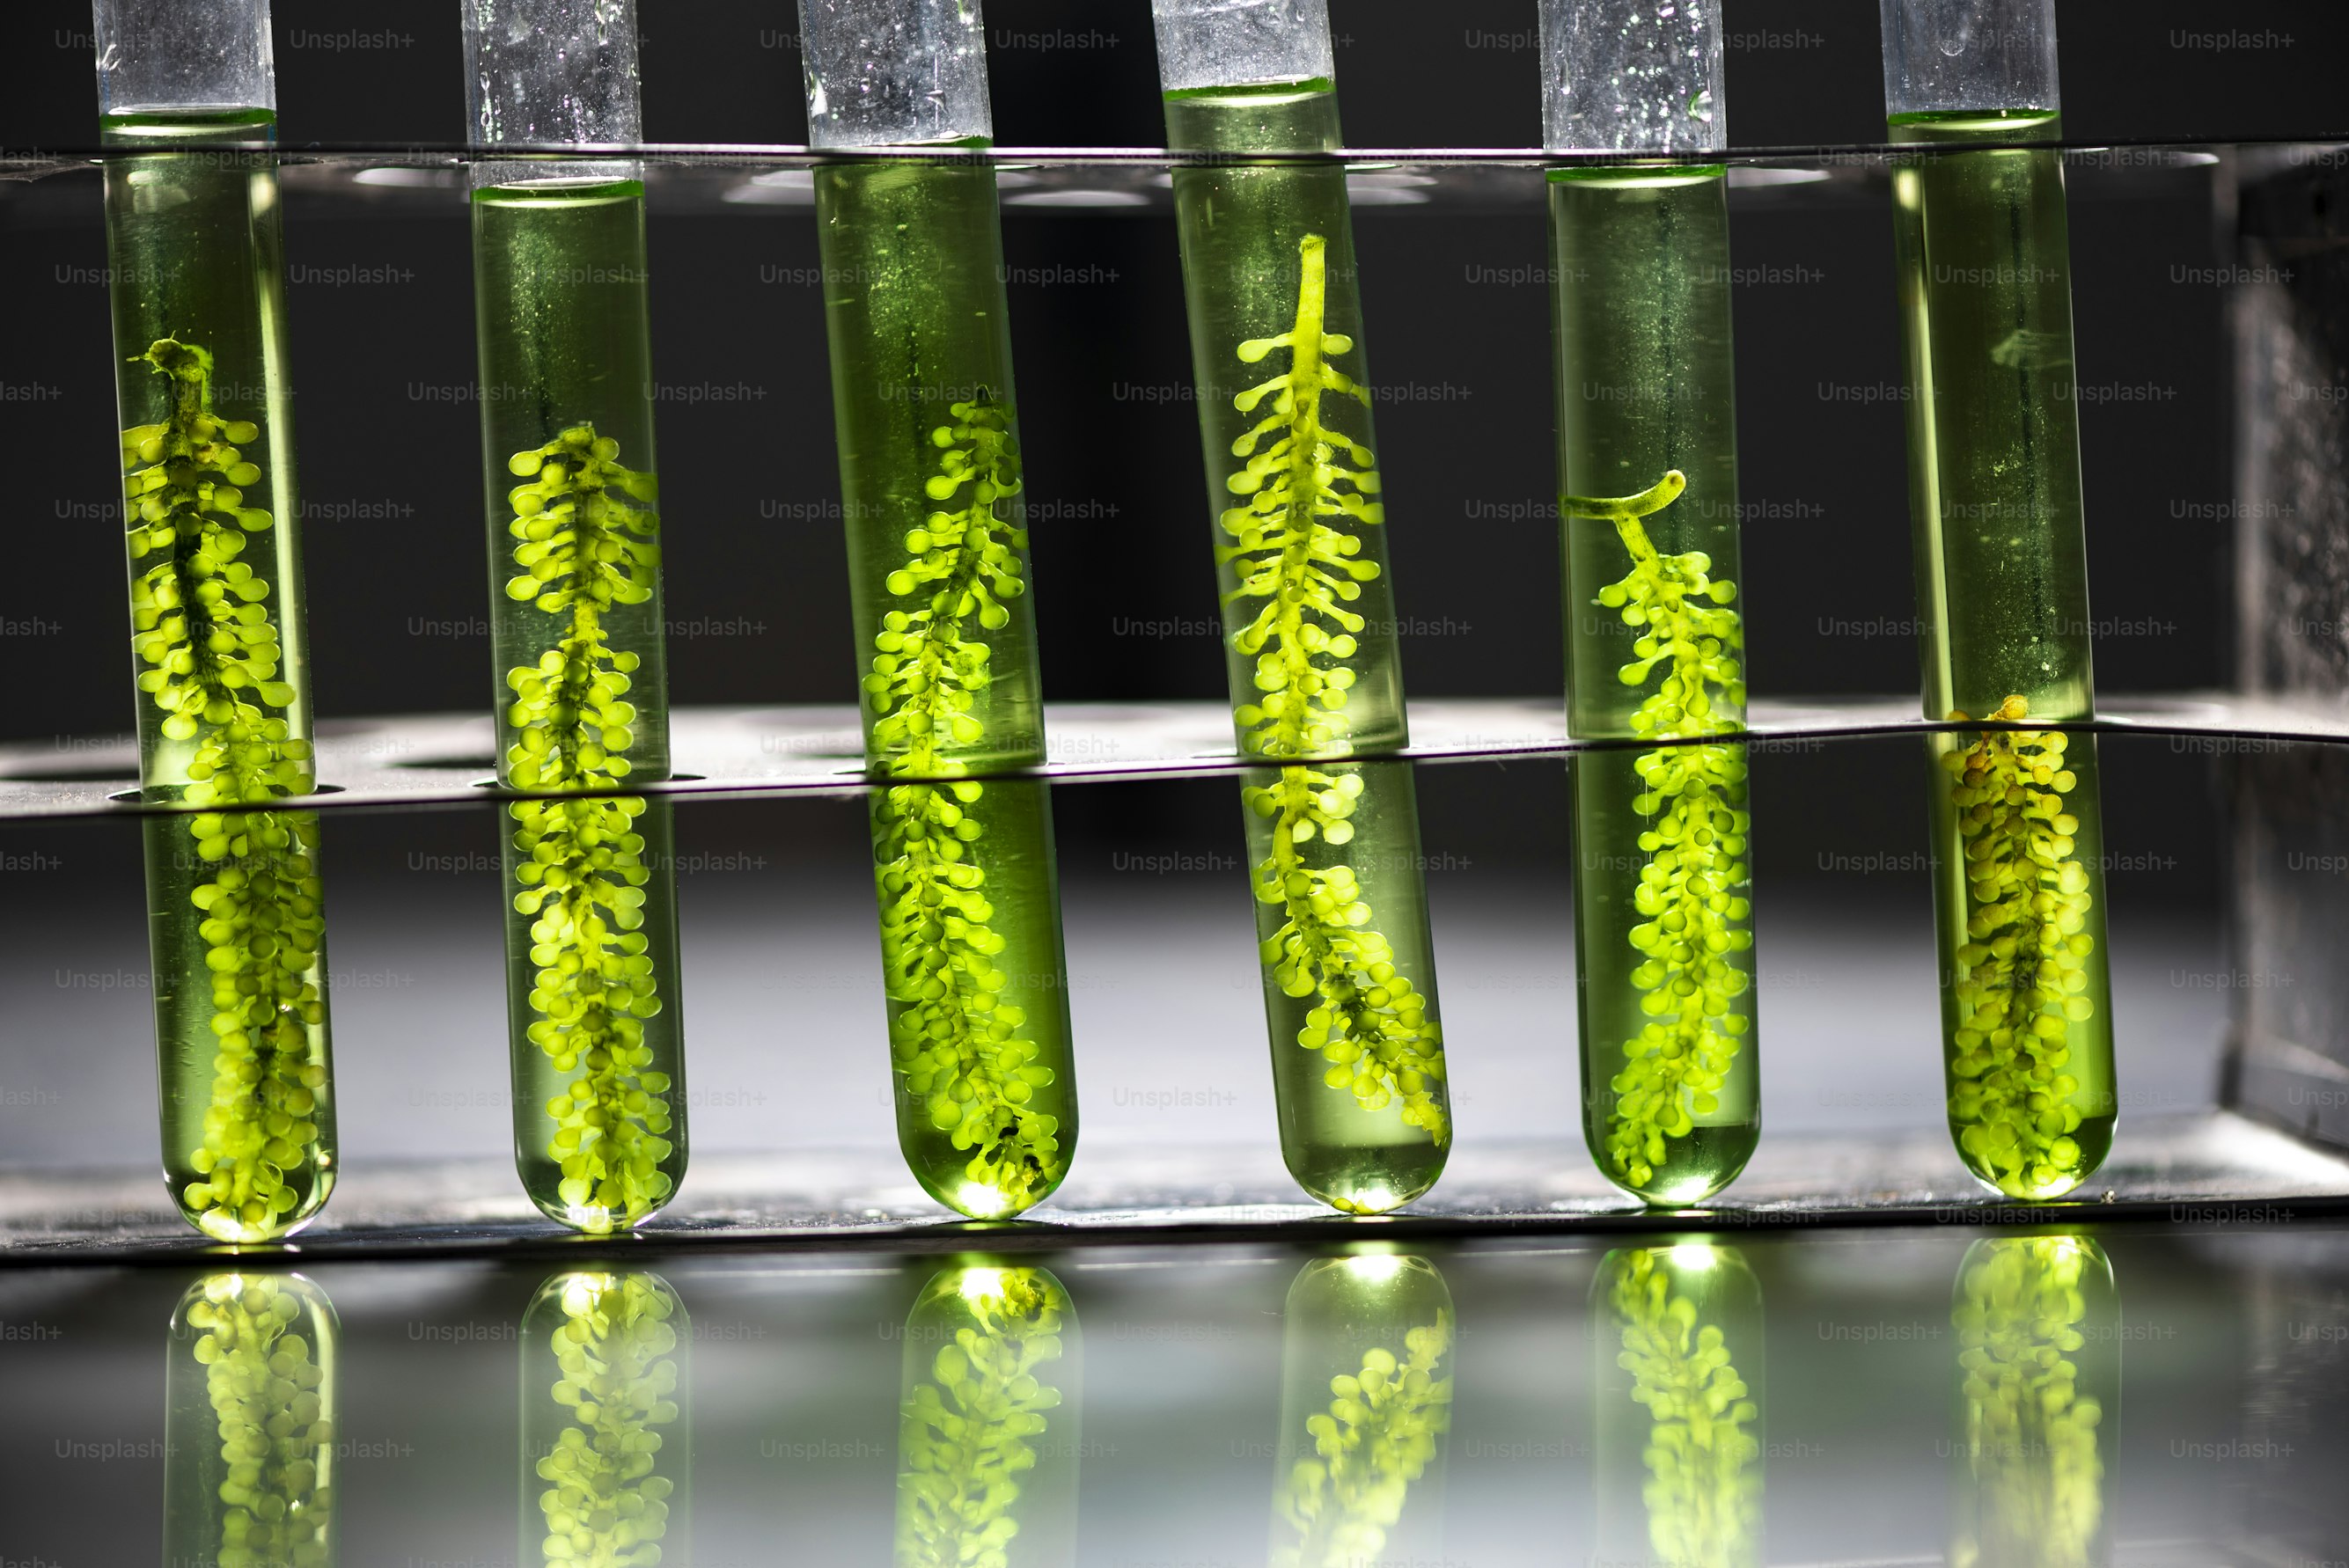 test tubes with plants.  Credit: Getty Images via unsplash